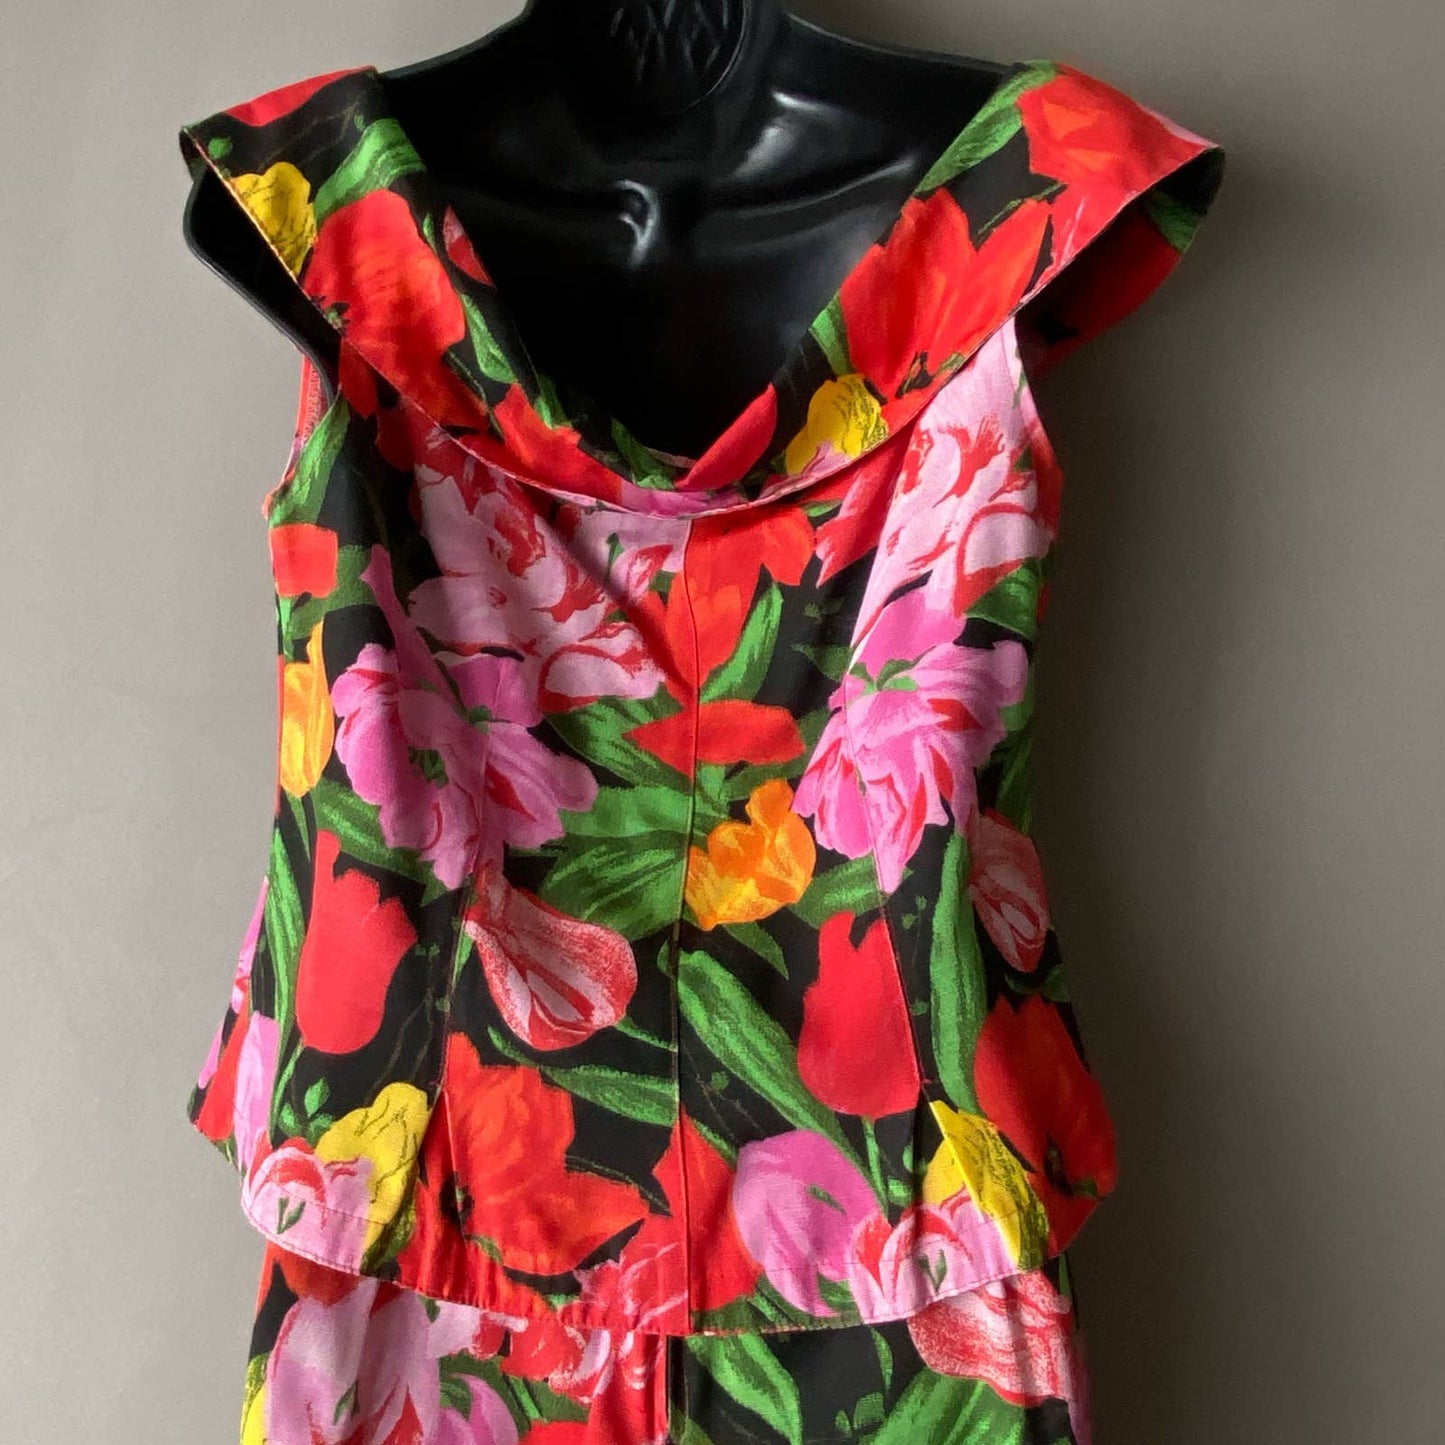 Vintage sz S/M Homemade floral top & skirt set